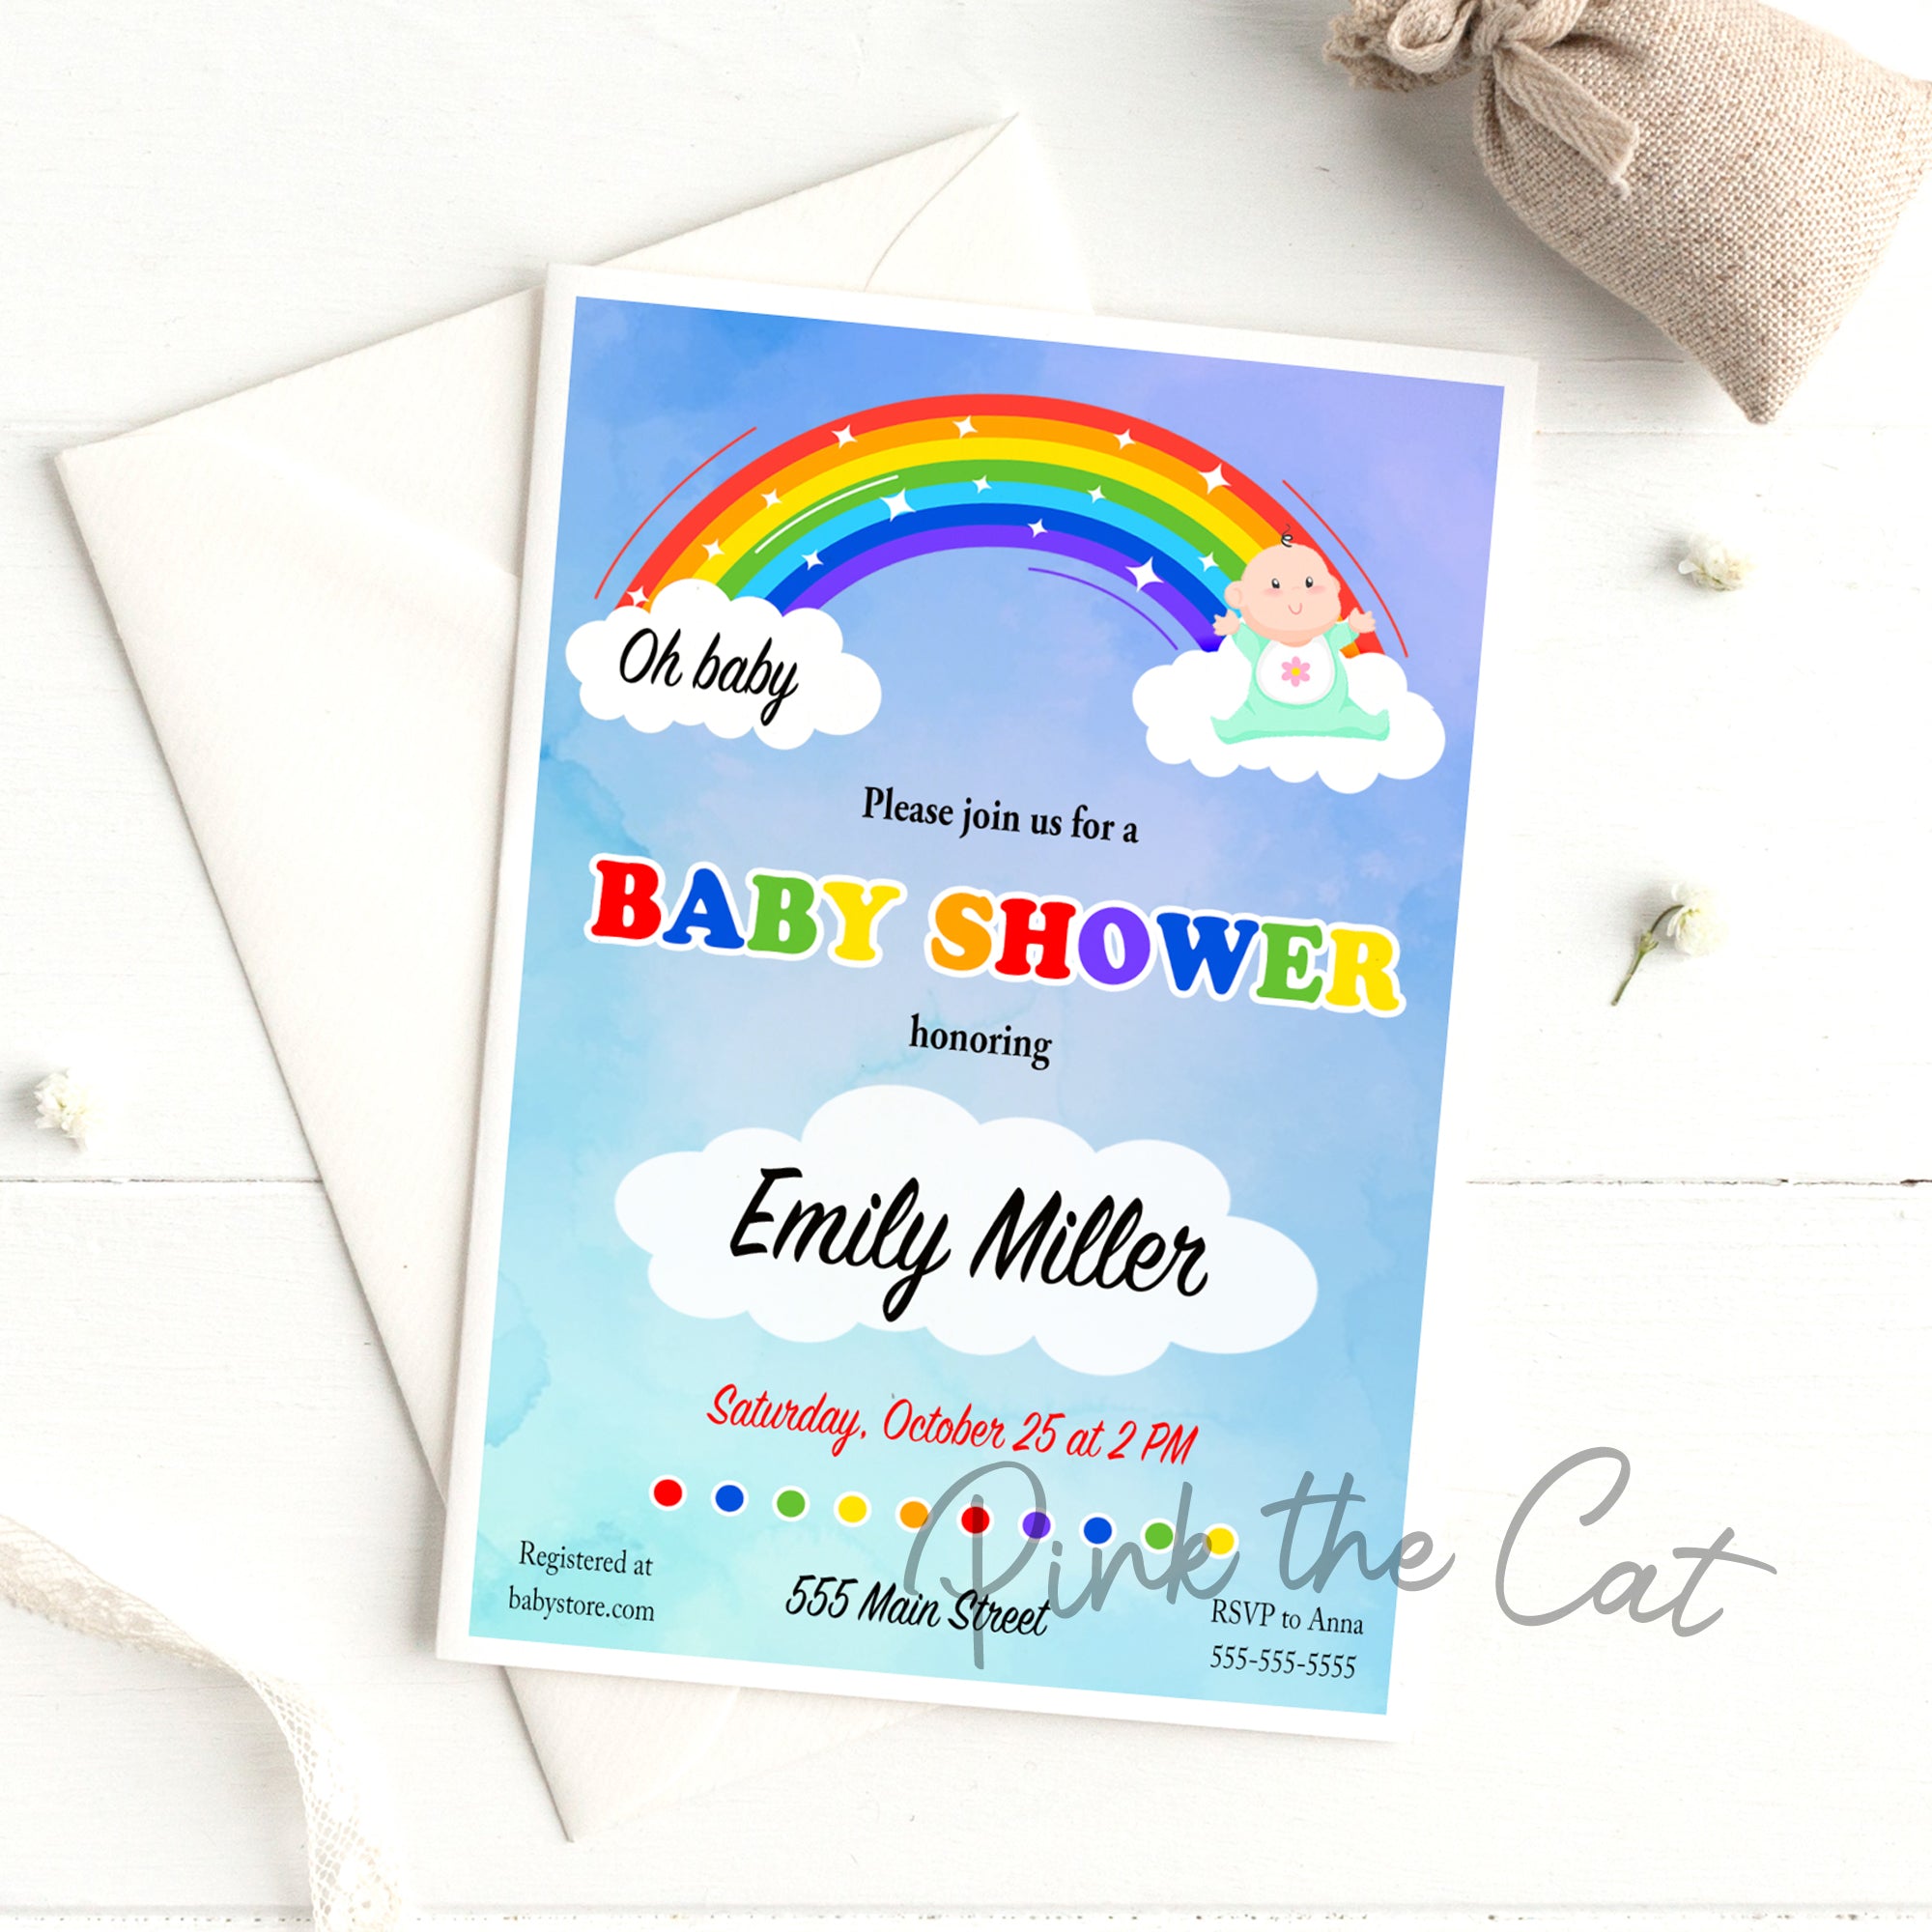 Oh baby ranibow baby shower invitation gender neutral 